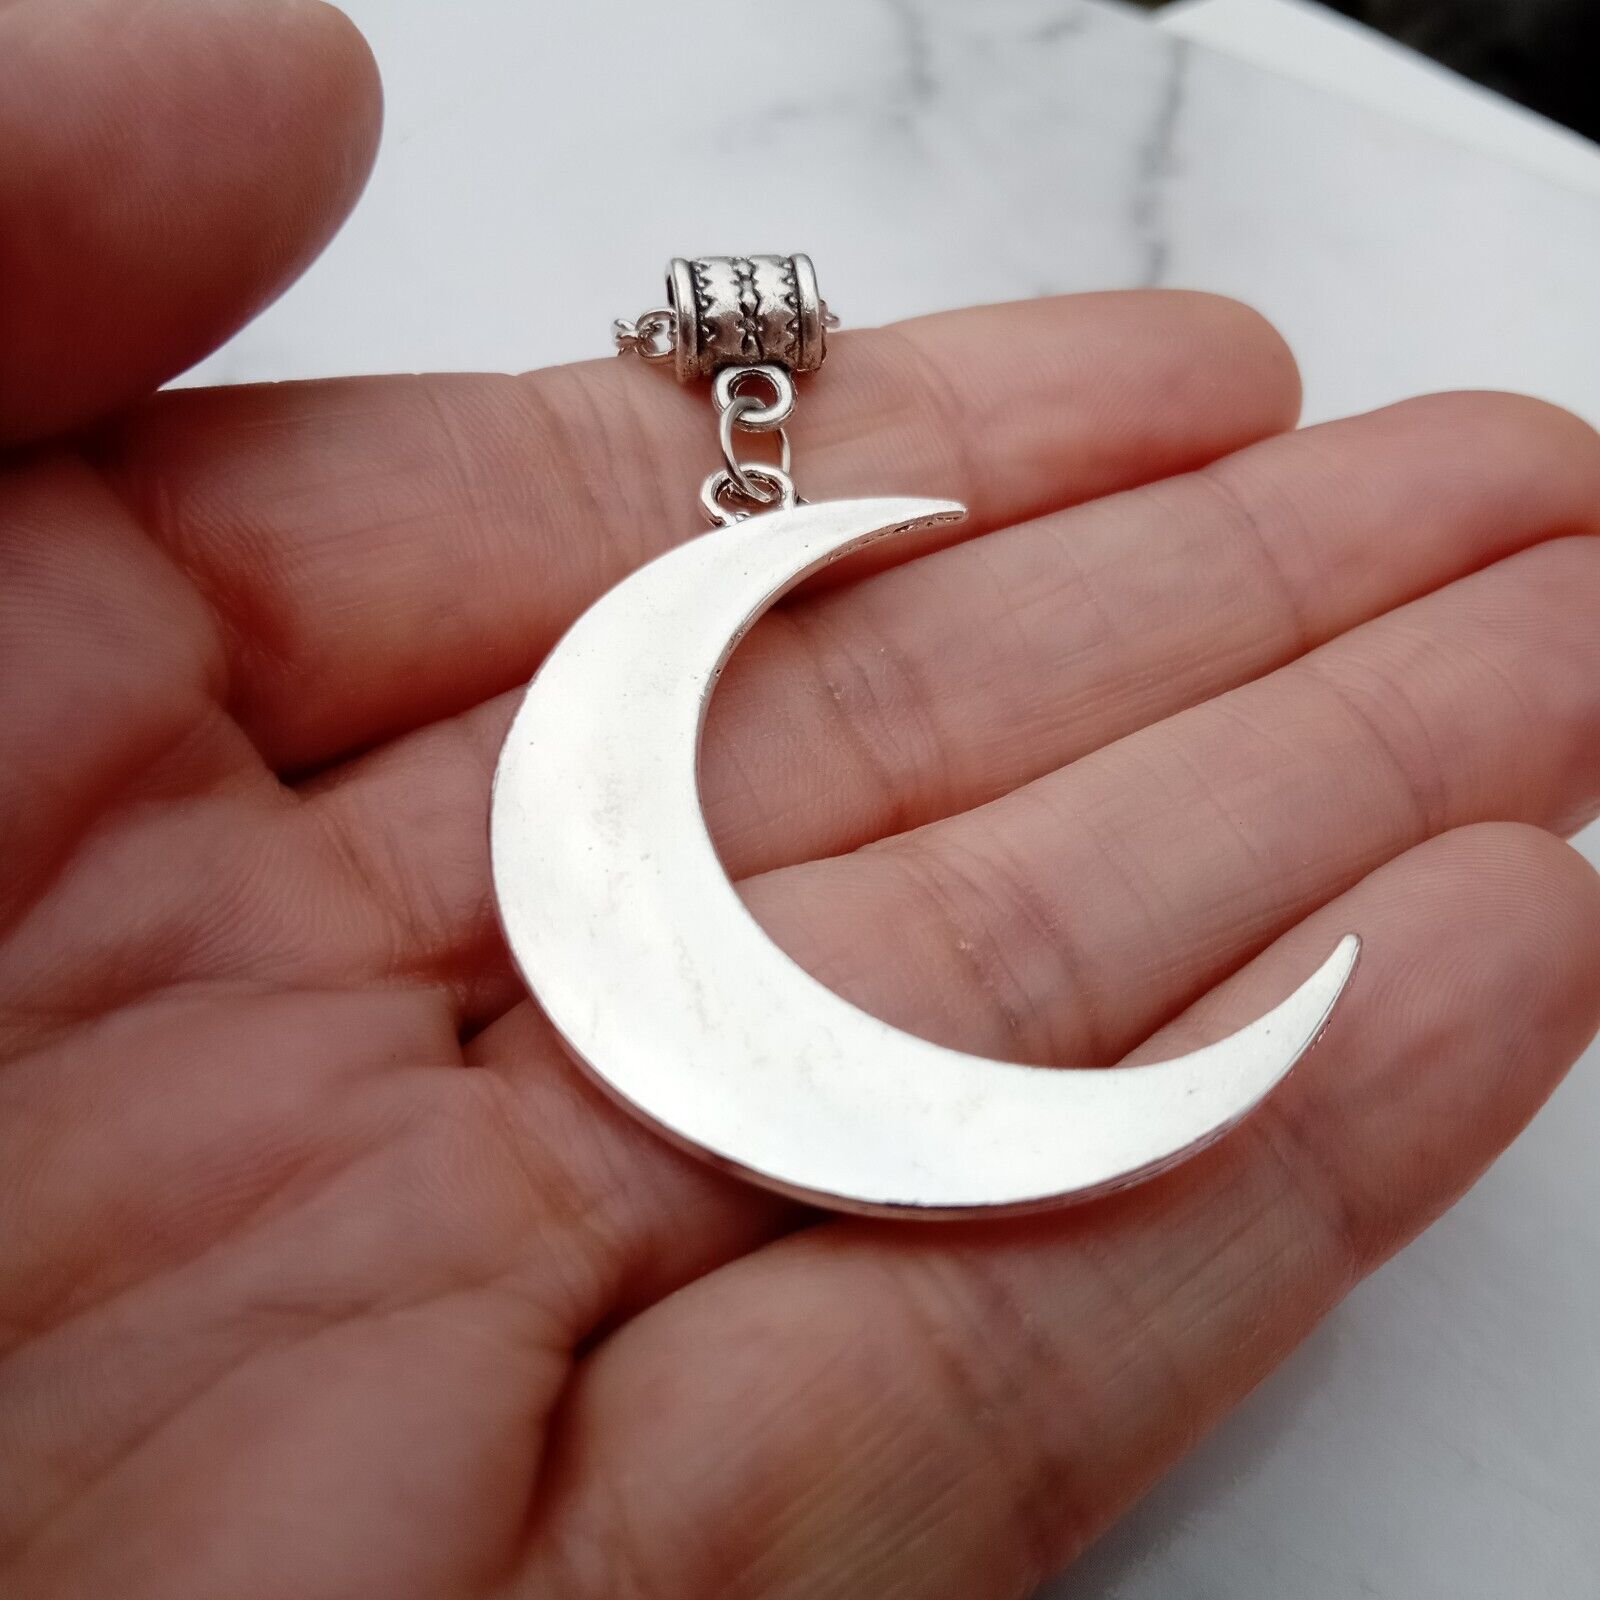 Large MOON Pendant Necklace 24 " Long chain Pagan Symbol silver tone Fun